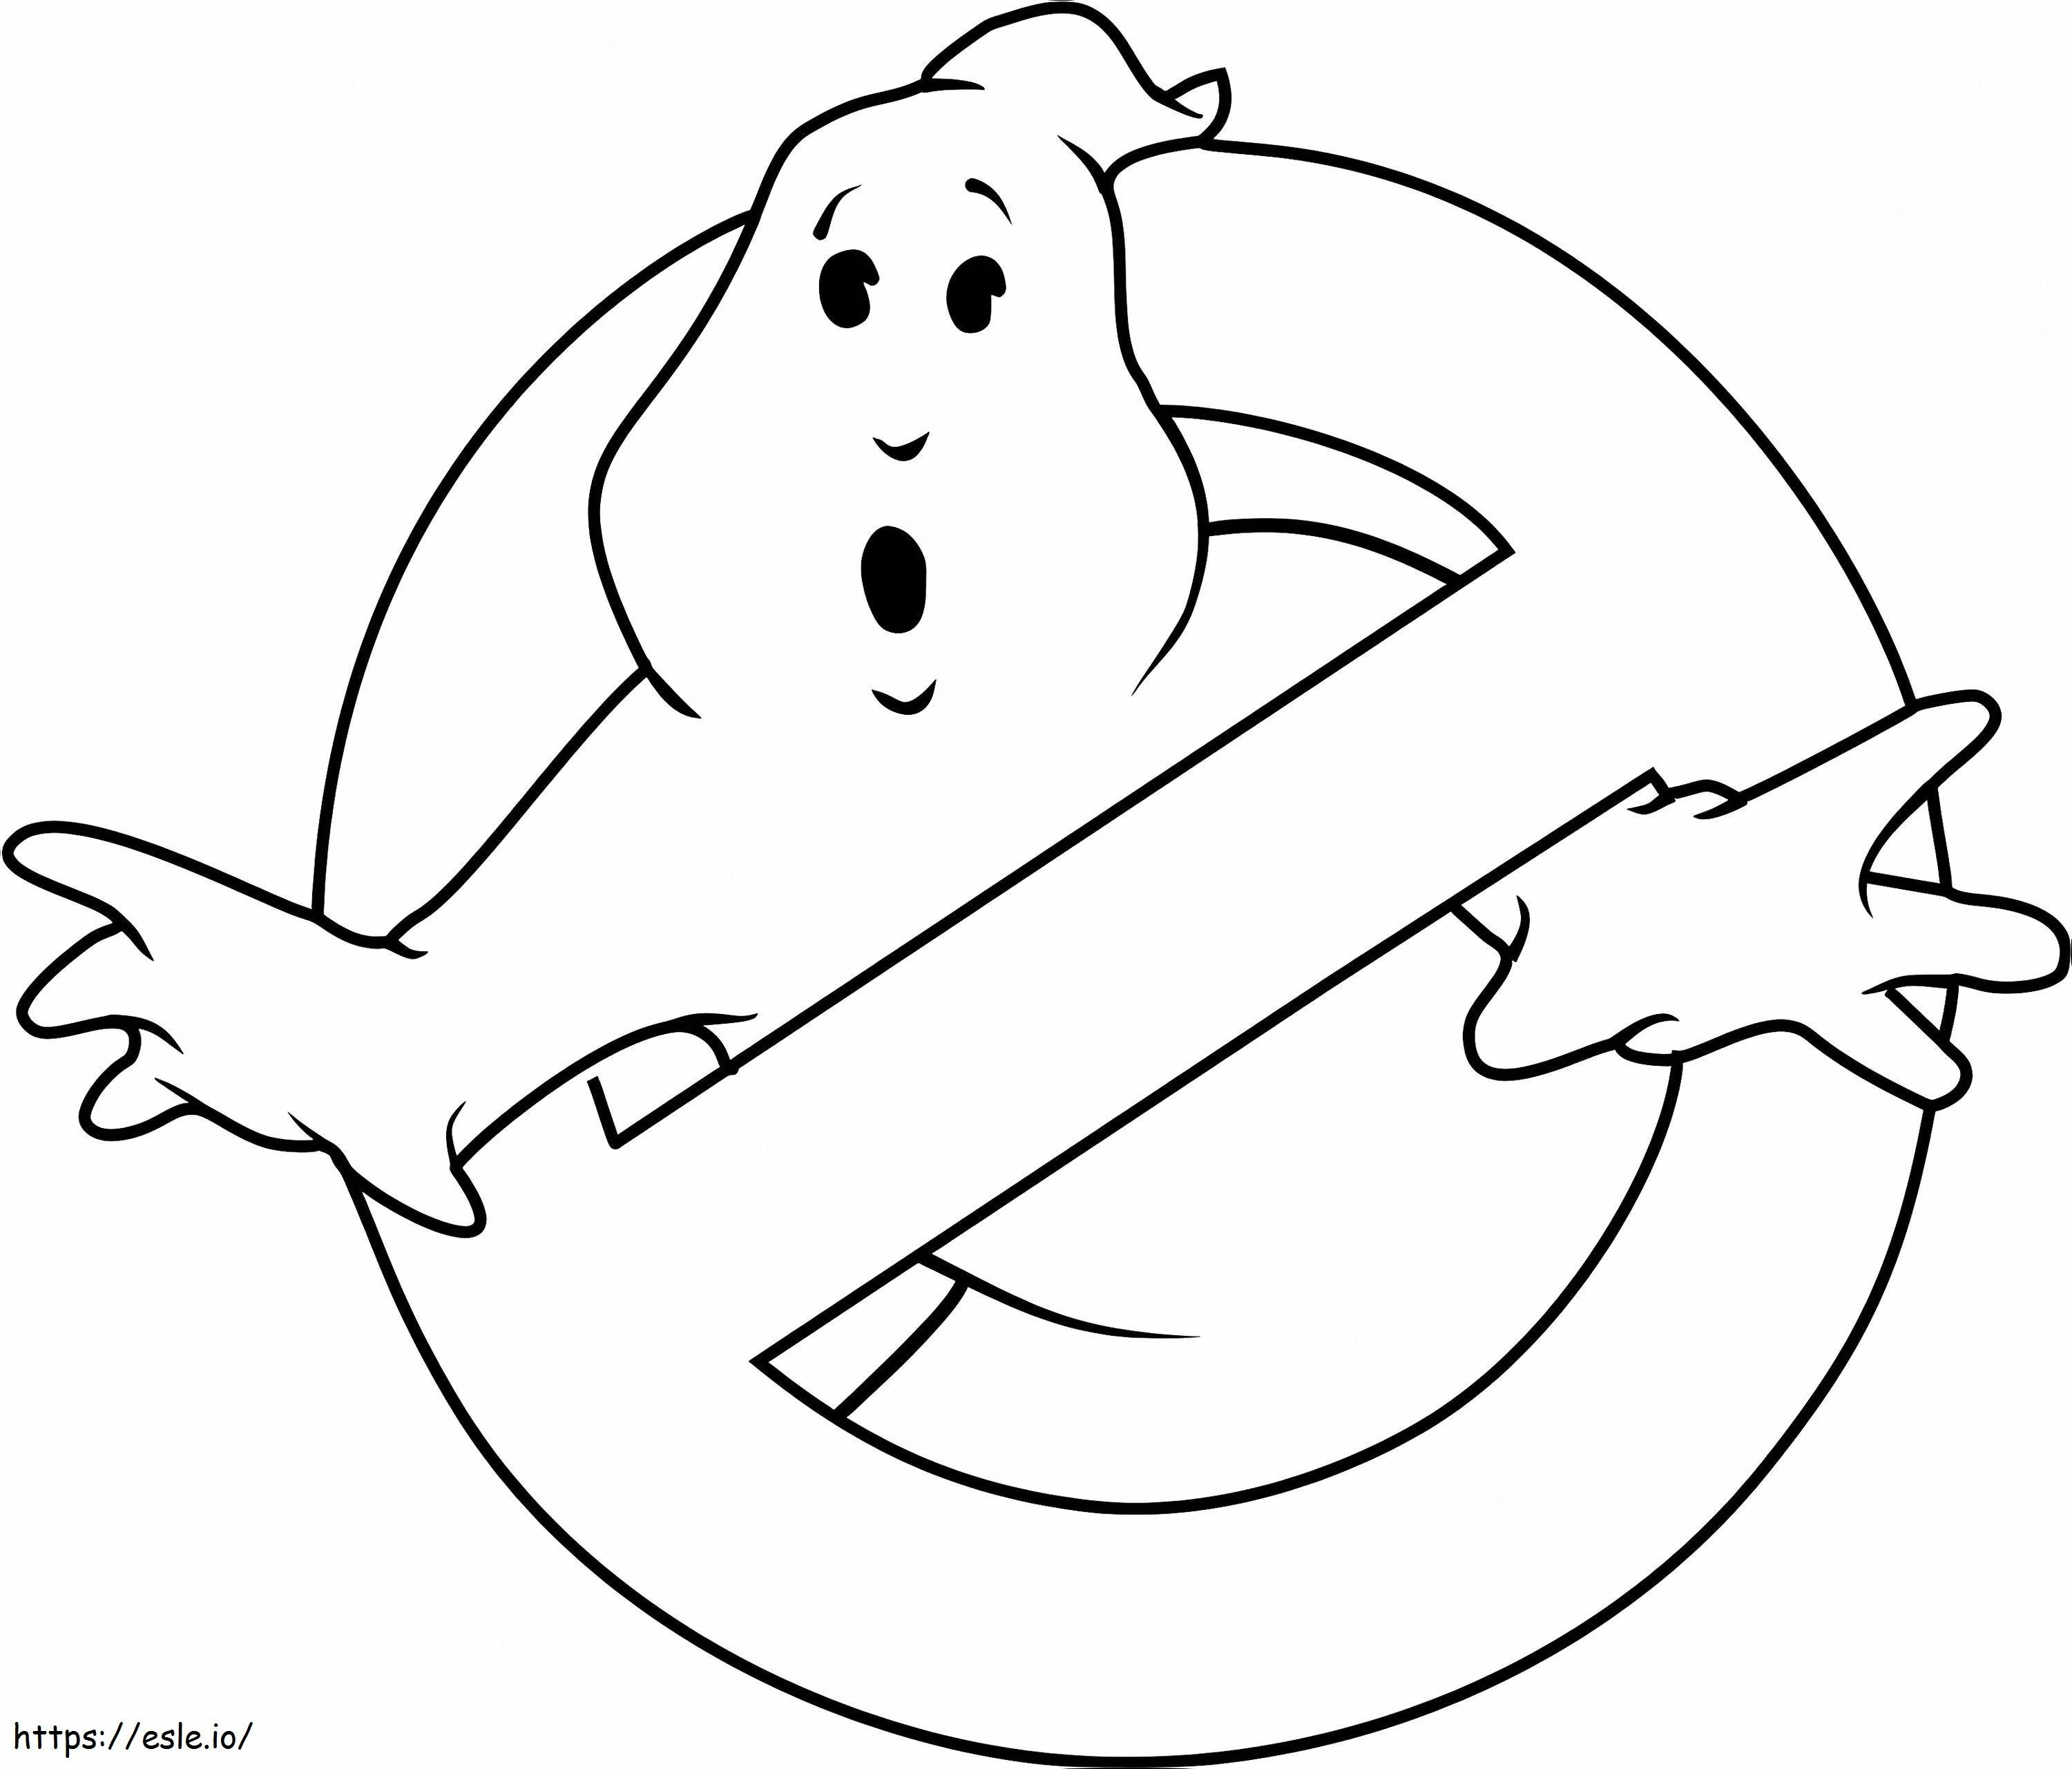 1532145428 Logotipo dos Caça-Fantasmas A4 para colorir